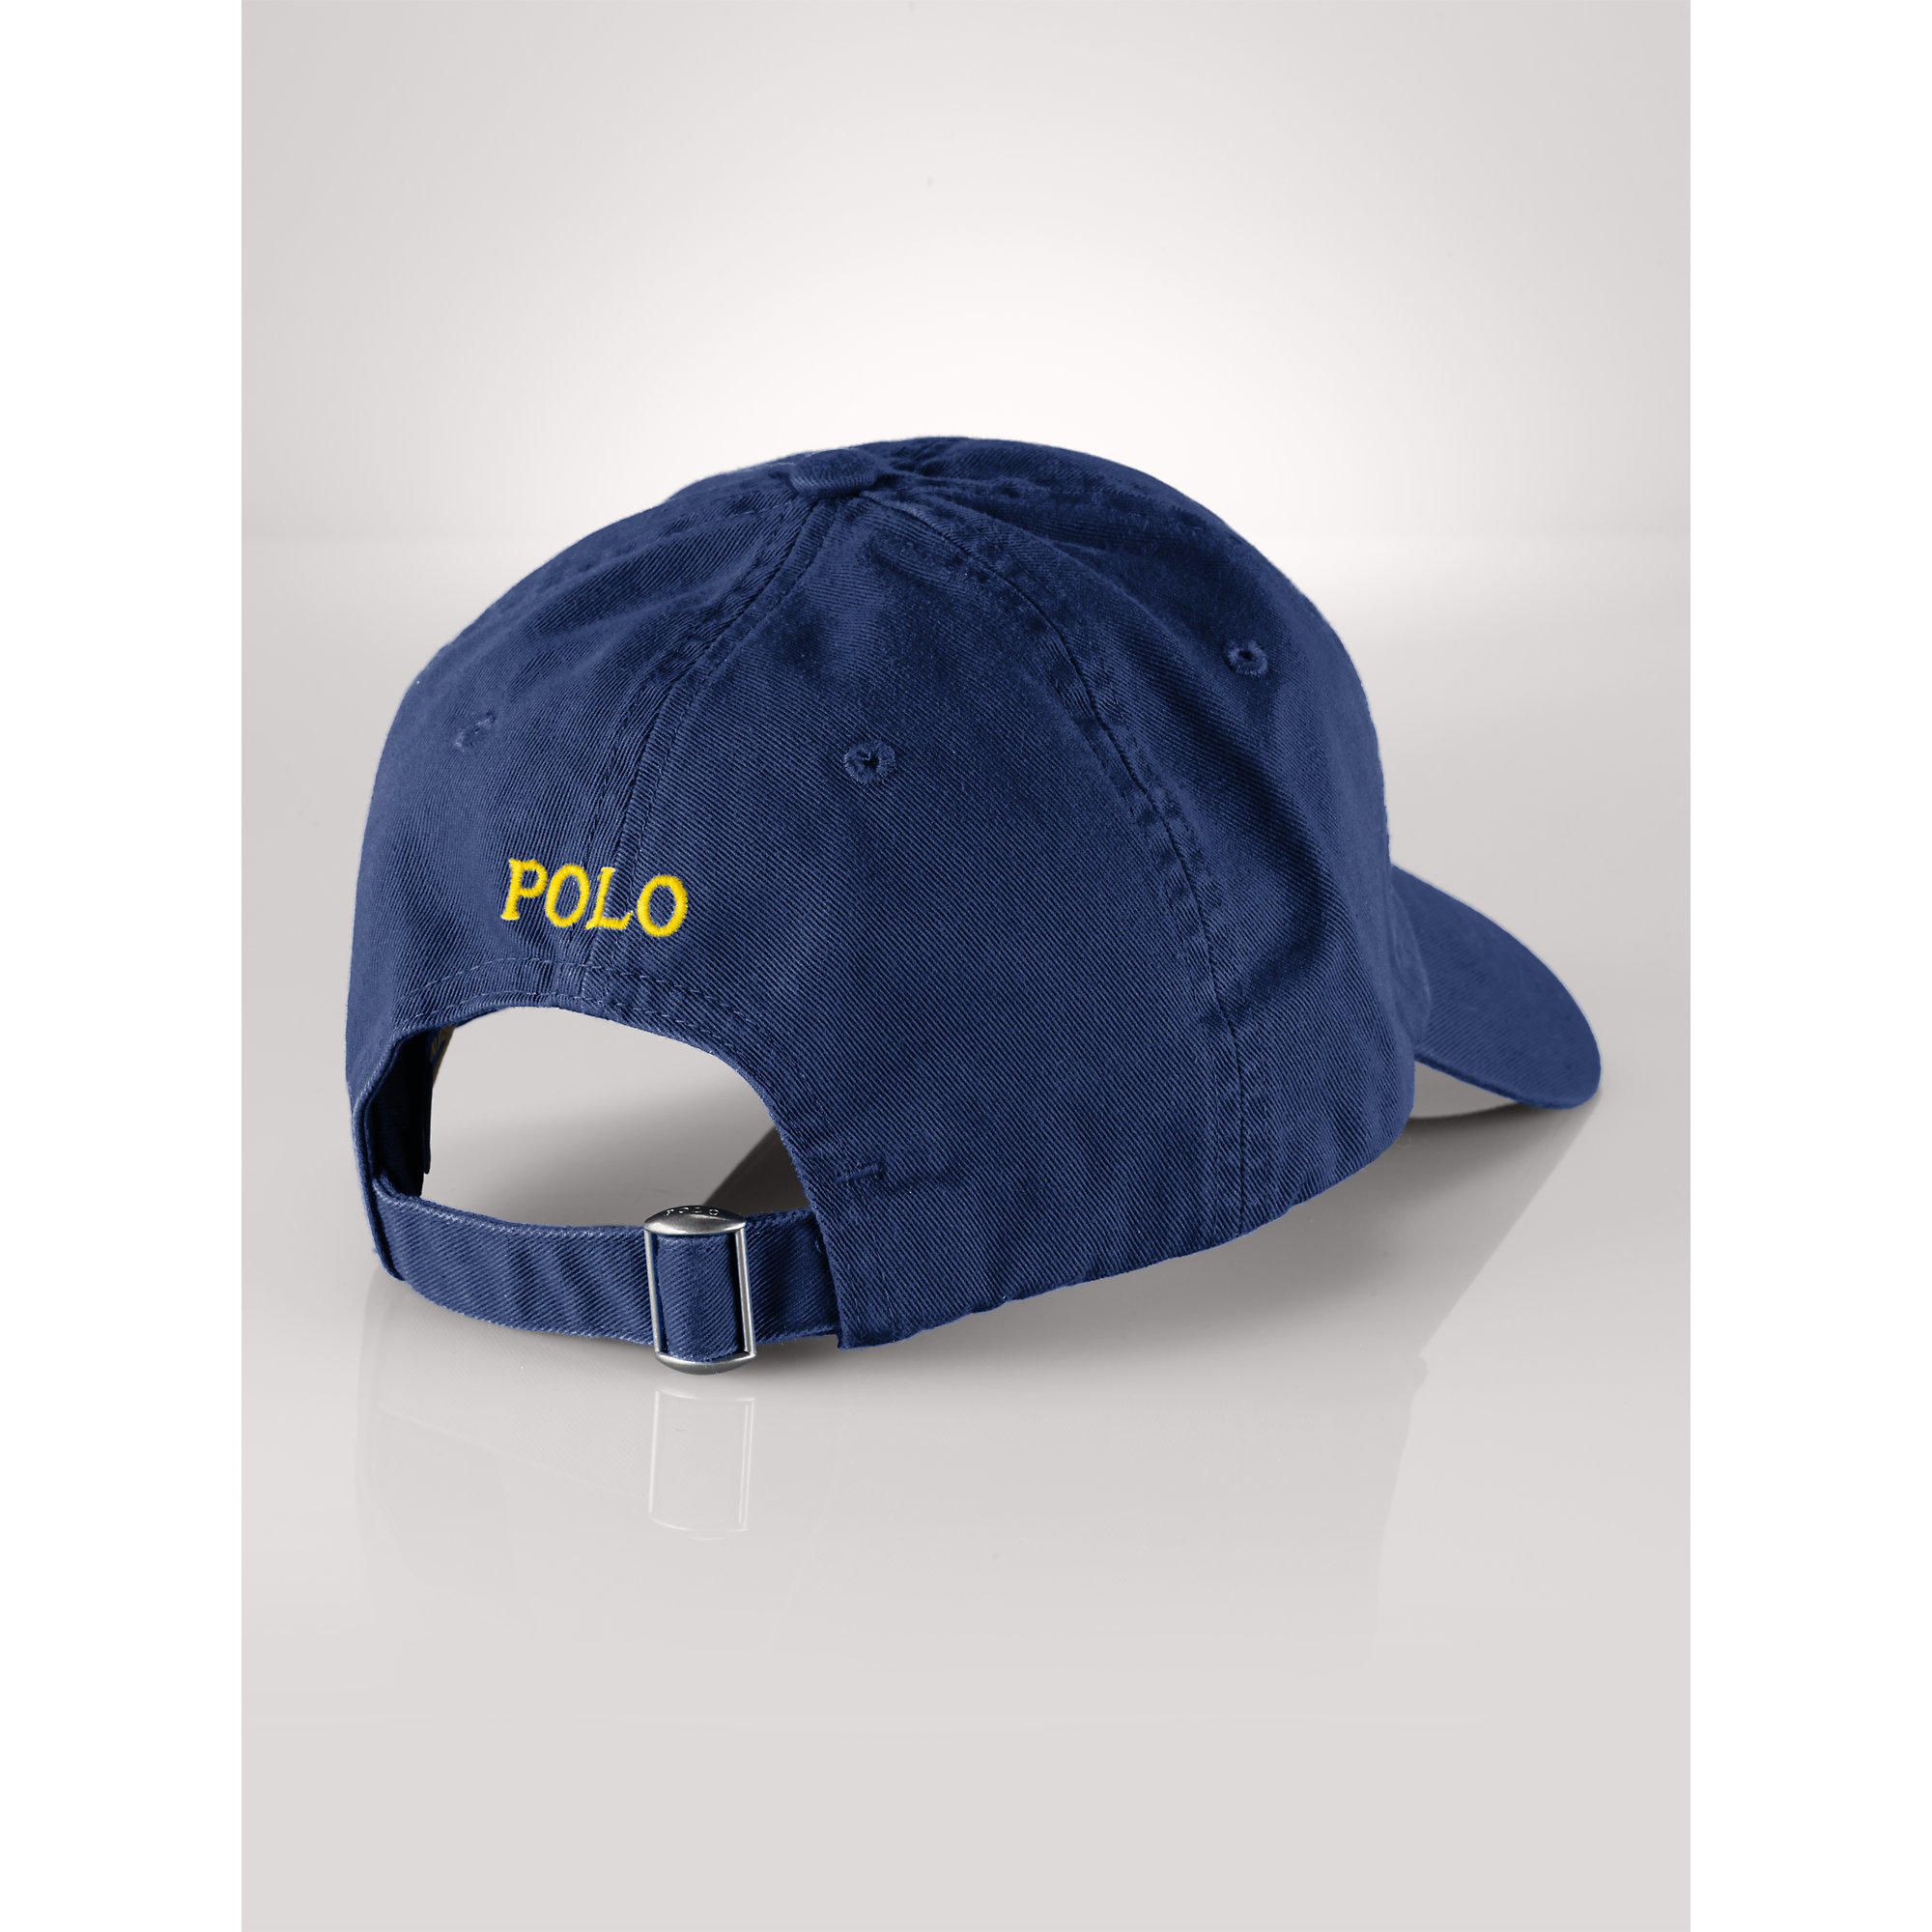 Polo Ralph Lauren Cotton Chino Baseball Cap in Blue for Men - Lyst